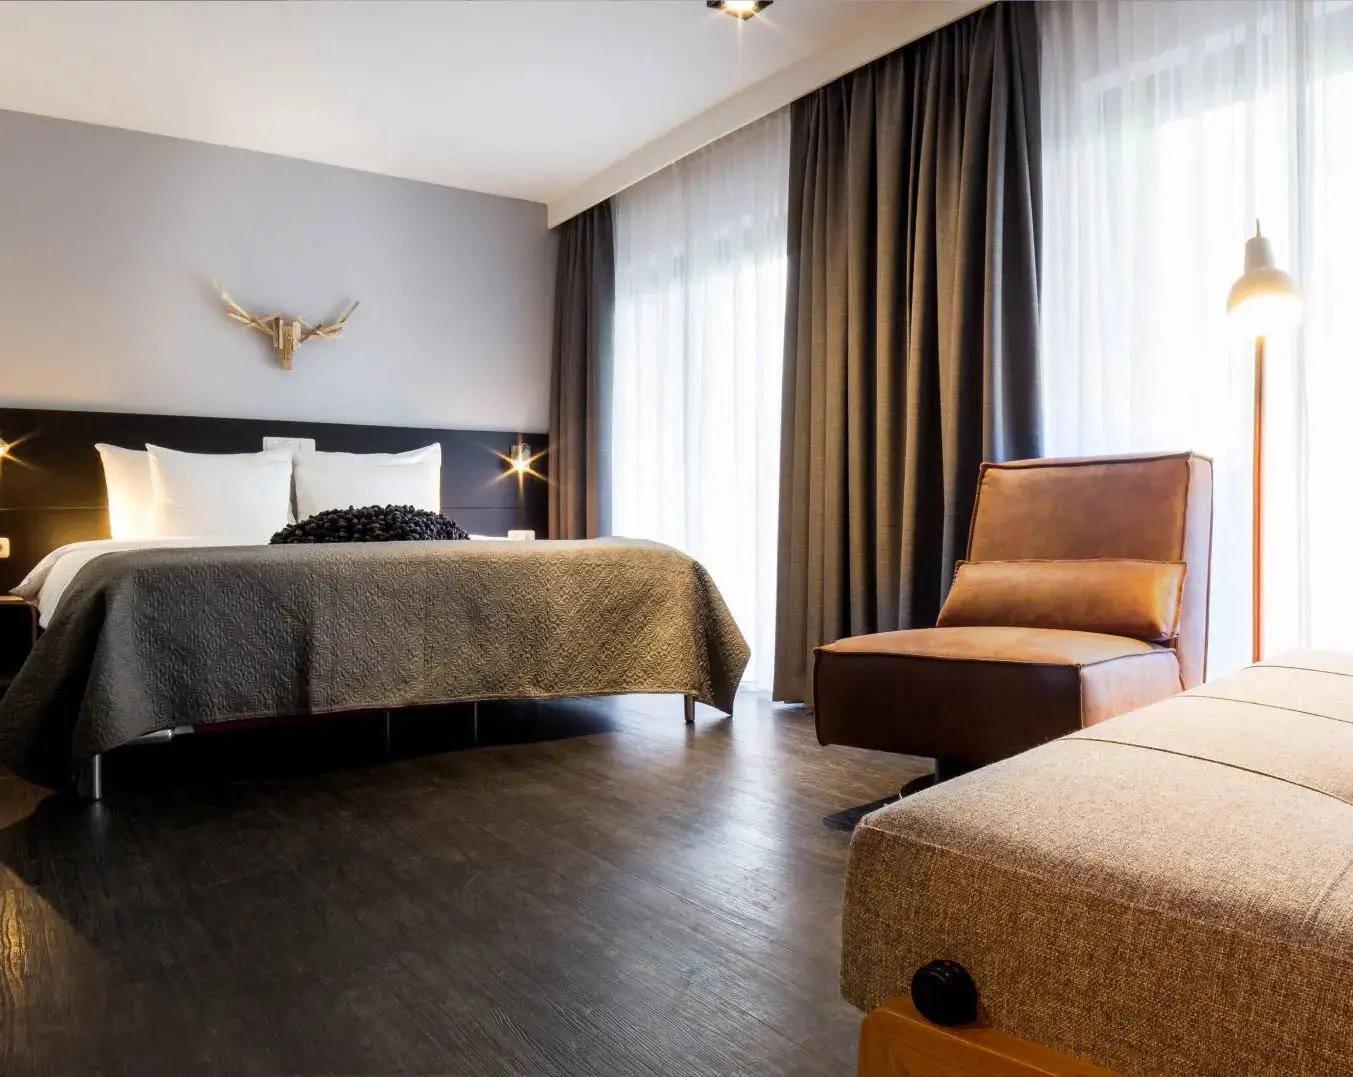 Seamless luxury Hotel de Sterrenberg achieves optimal workflow with Mews Website body Image 2 1352 x 1076-50 